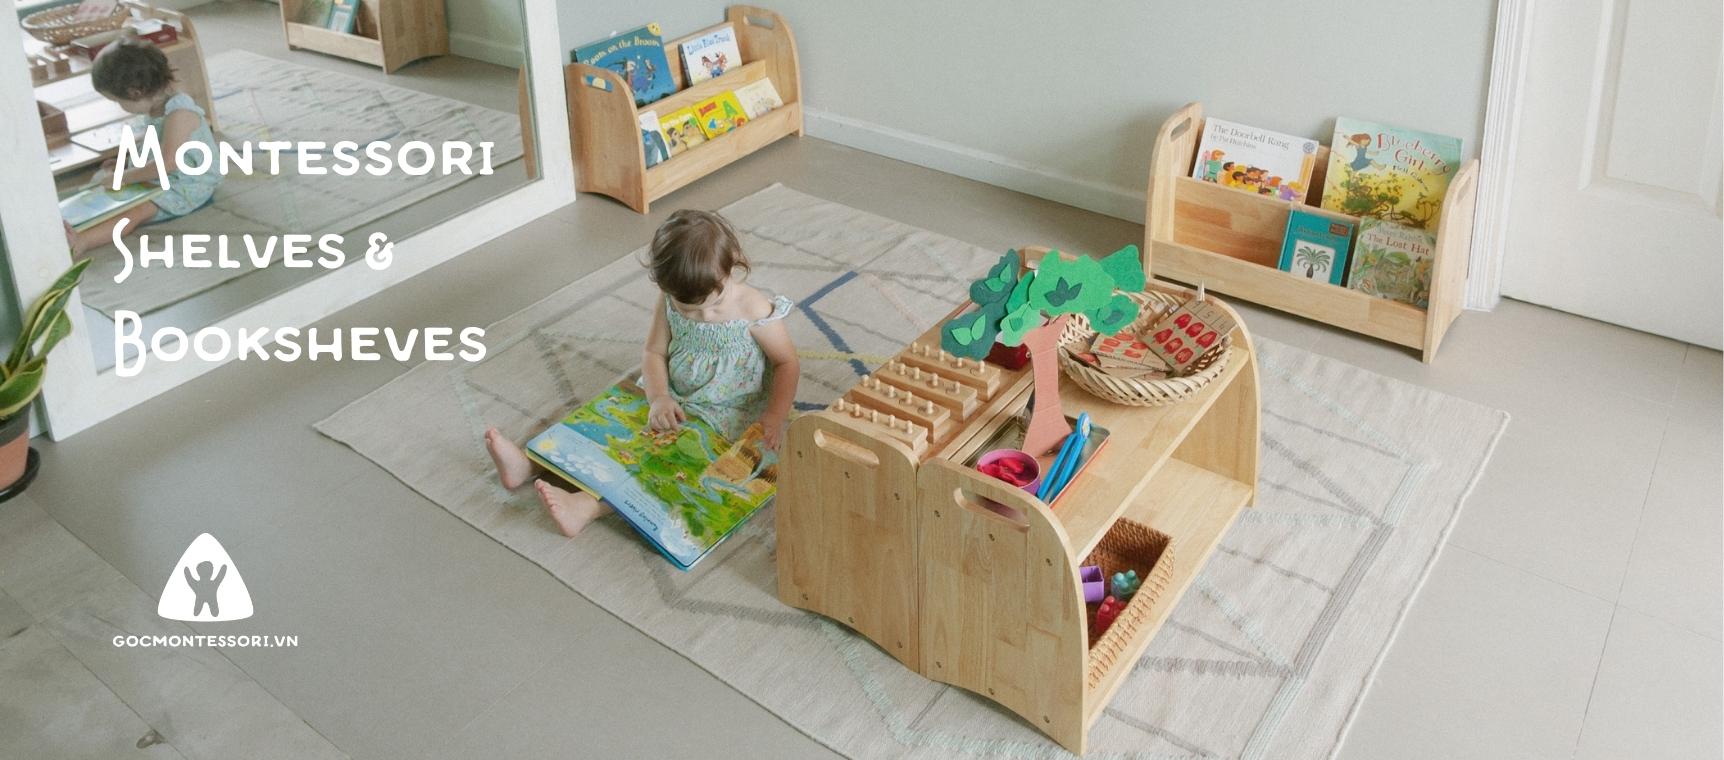 Montessori Shelves & Bookshelves